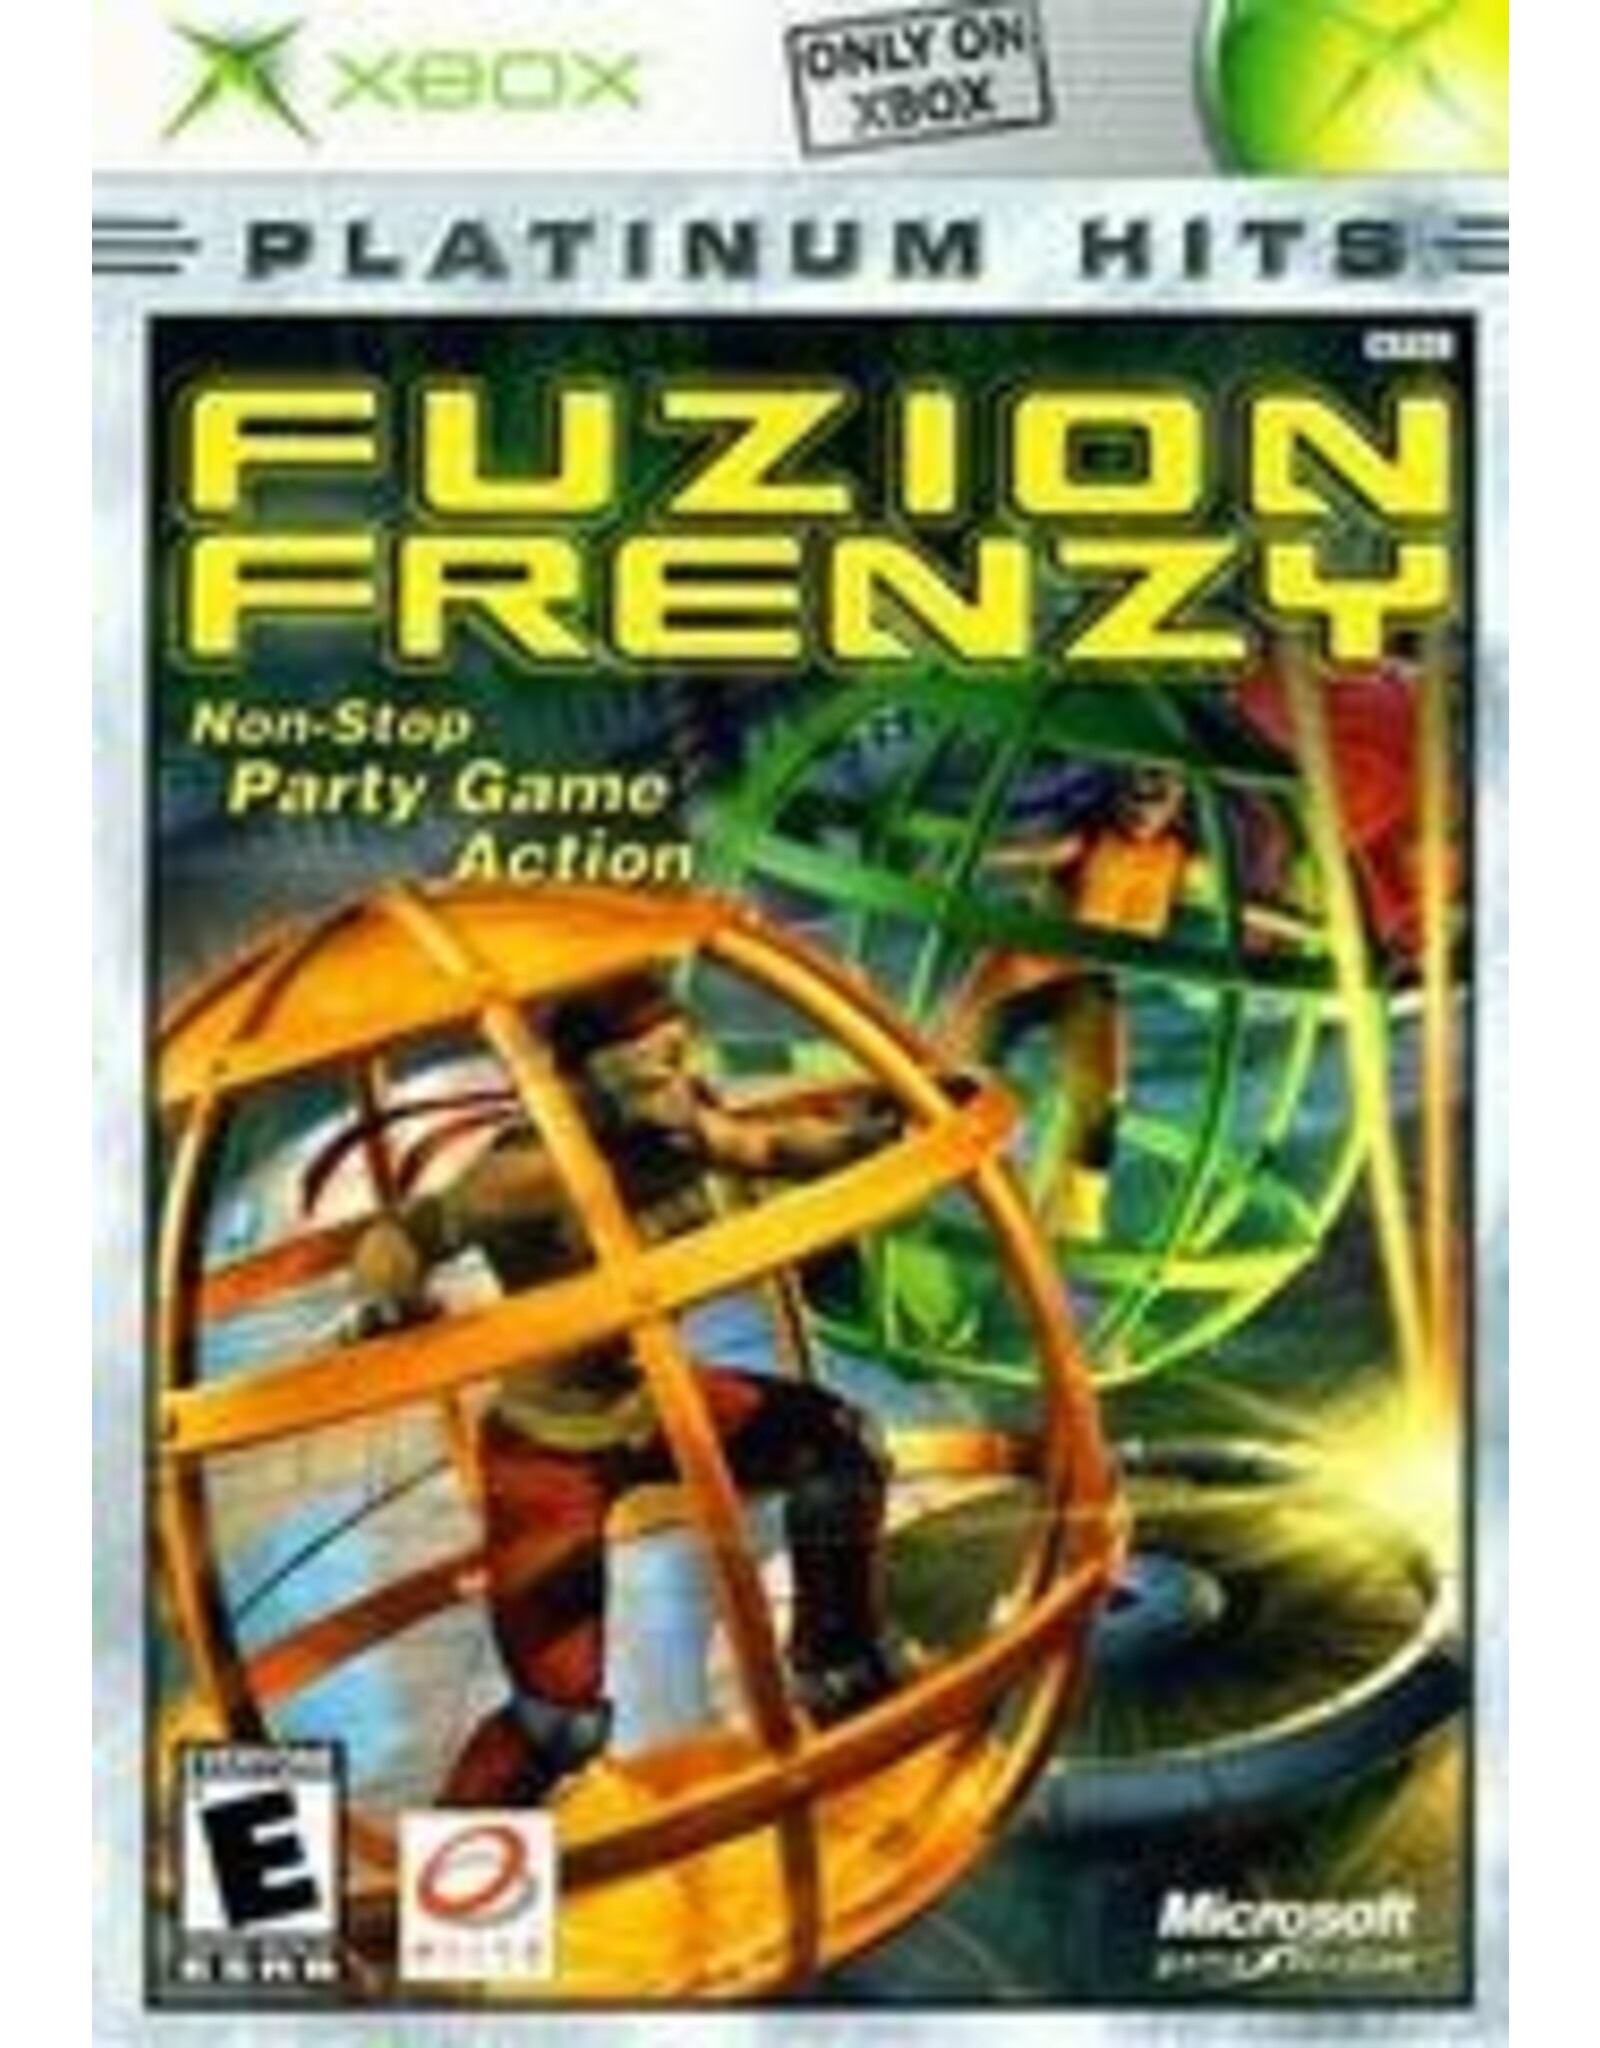 Xbox Fuzion Frenzy (Platinum Hits, No Manual)